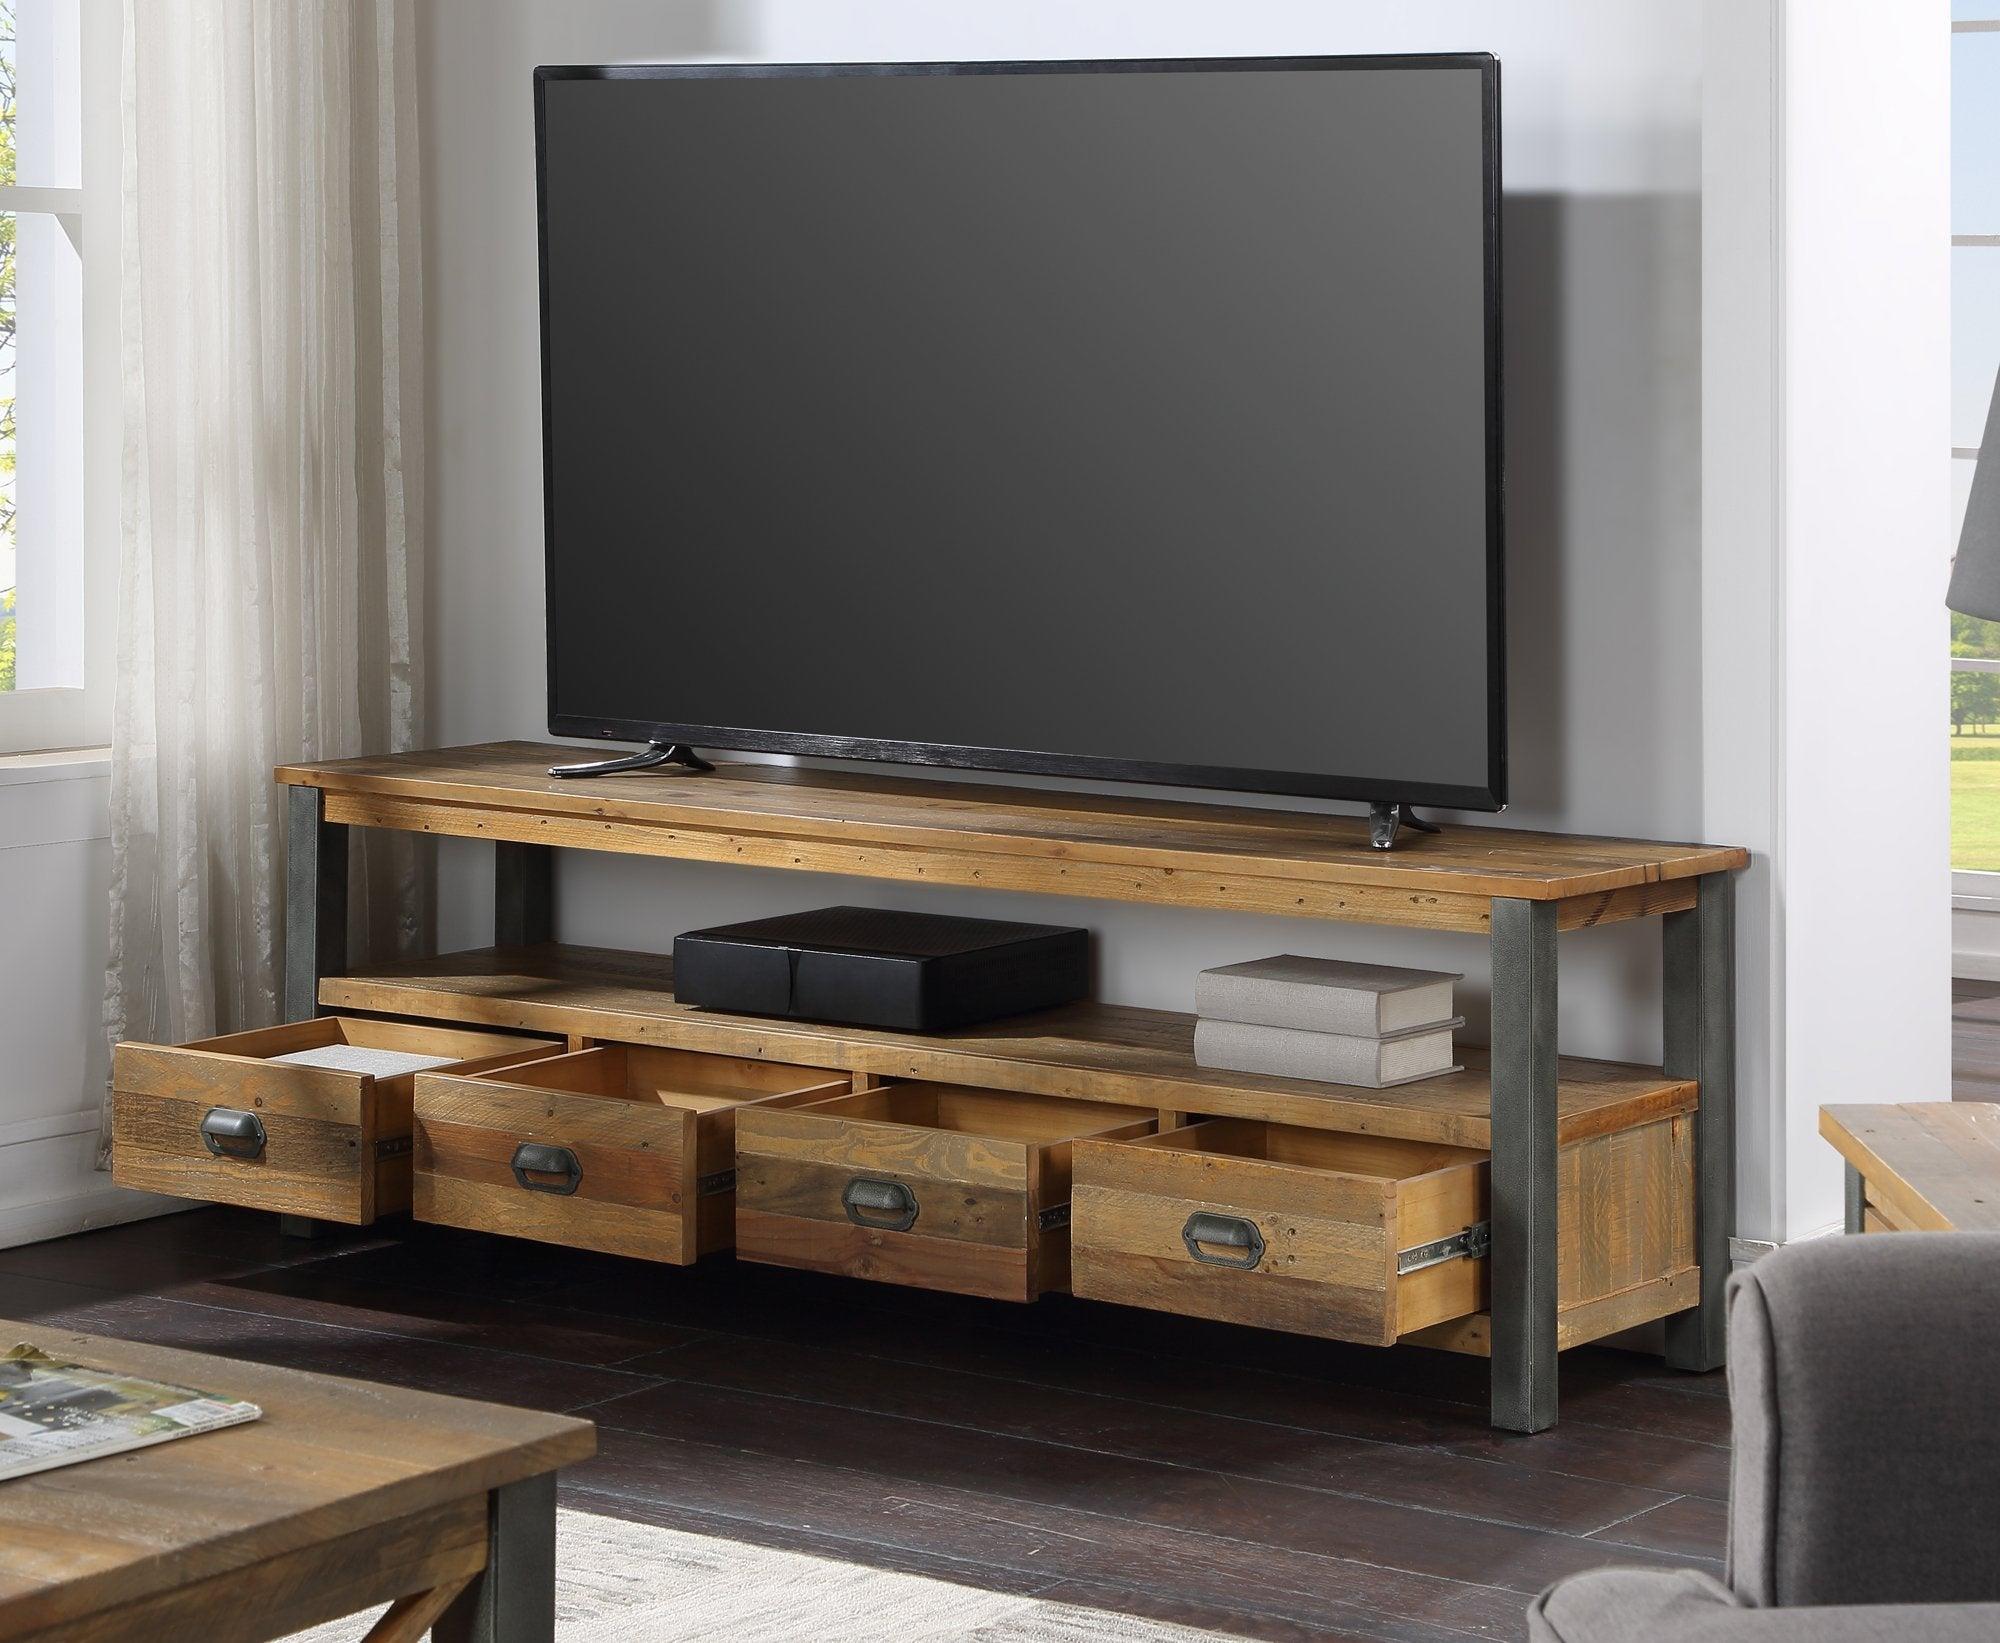 Urban elegance - reclaimed extra large widescreen tv unit - crimblefest furniture - image 2